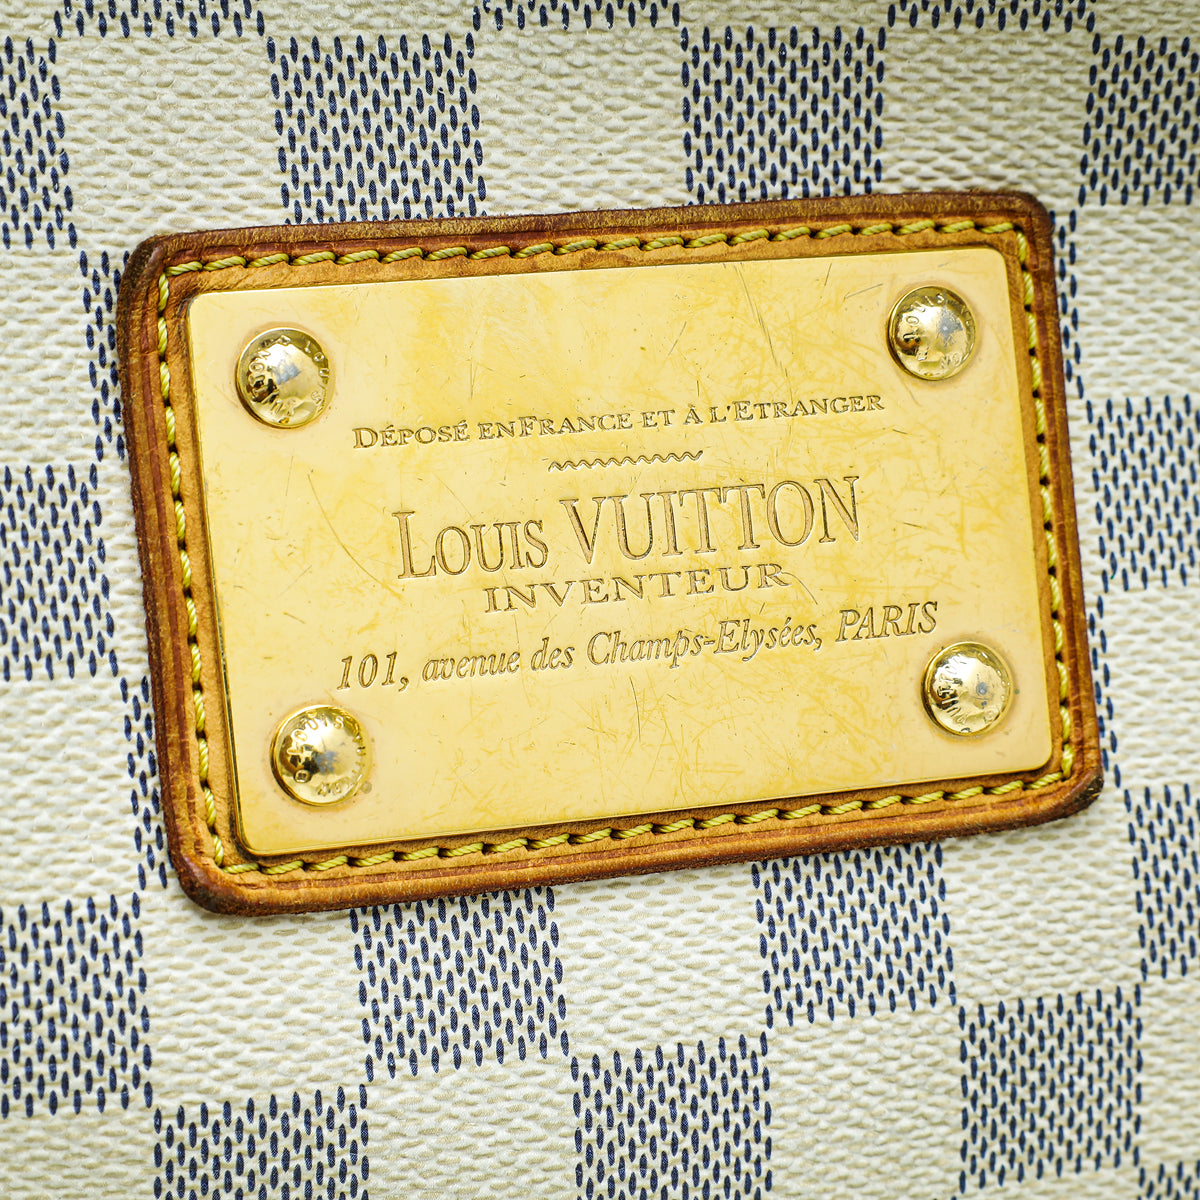 Louis Vuitton Azur Galliera PM Bag